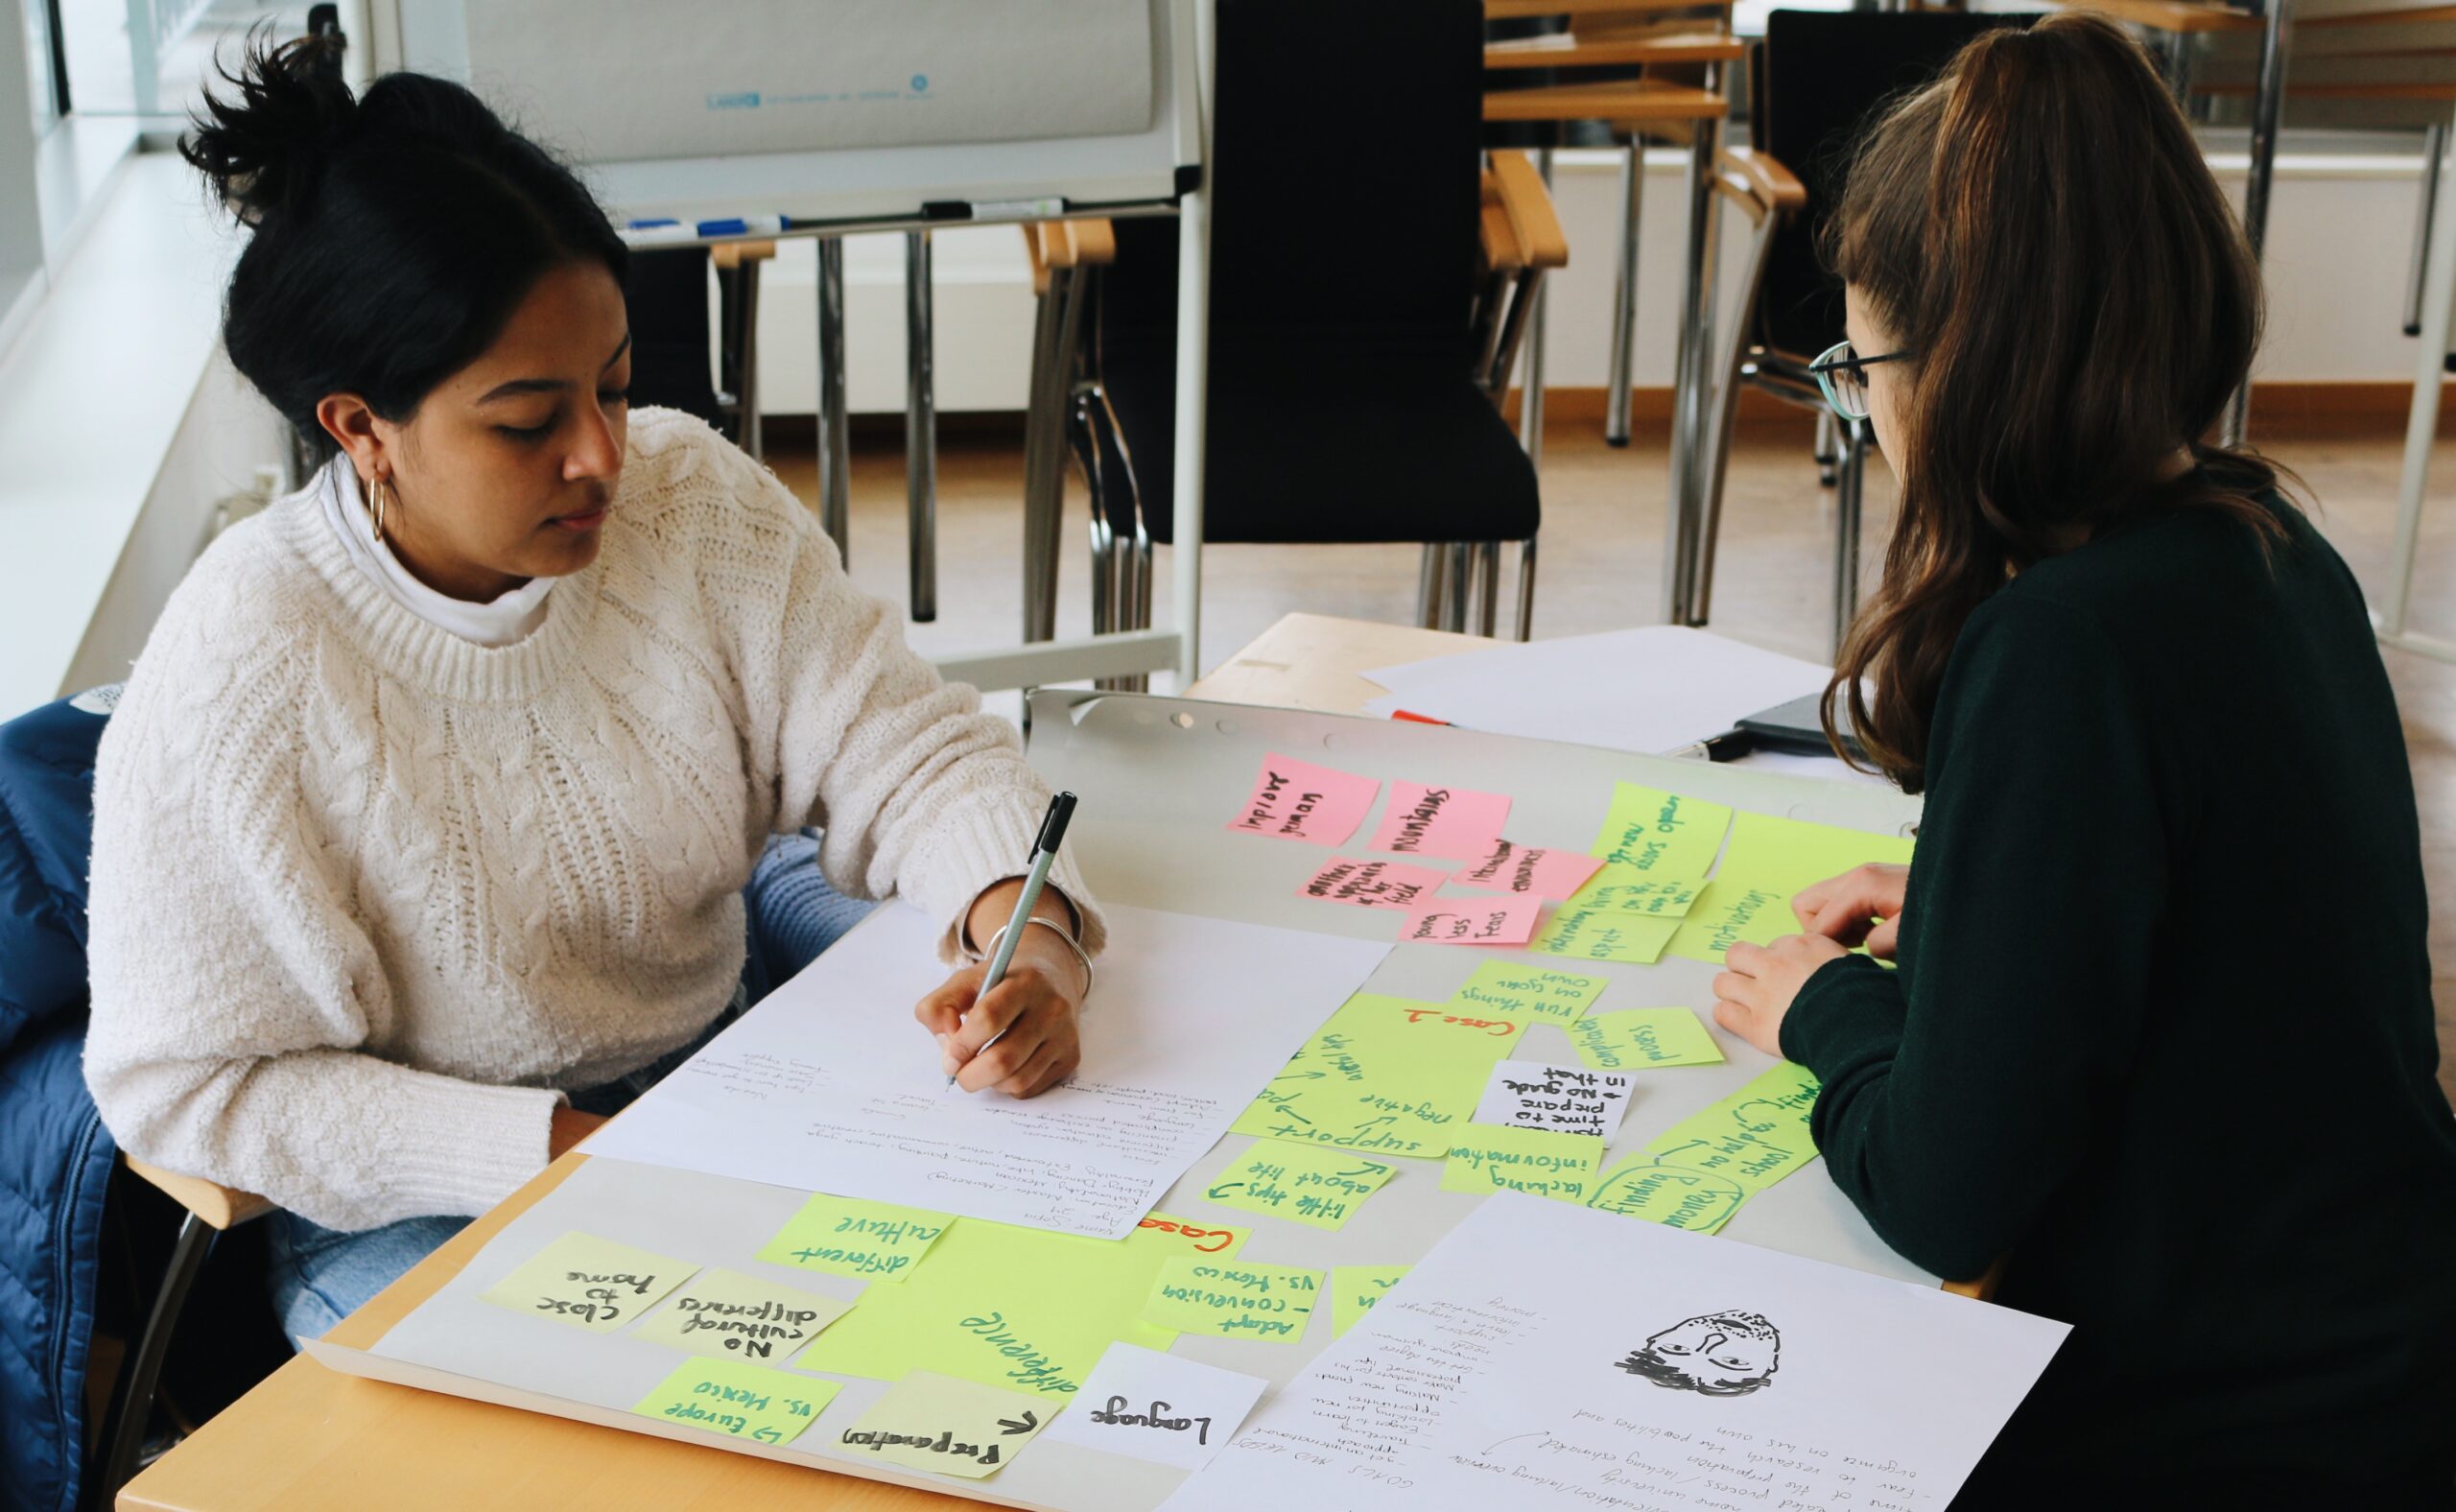 RIGO hosts design thinking workshops to address international mobility challenges